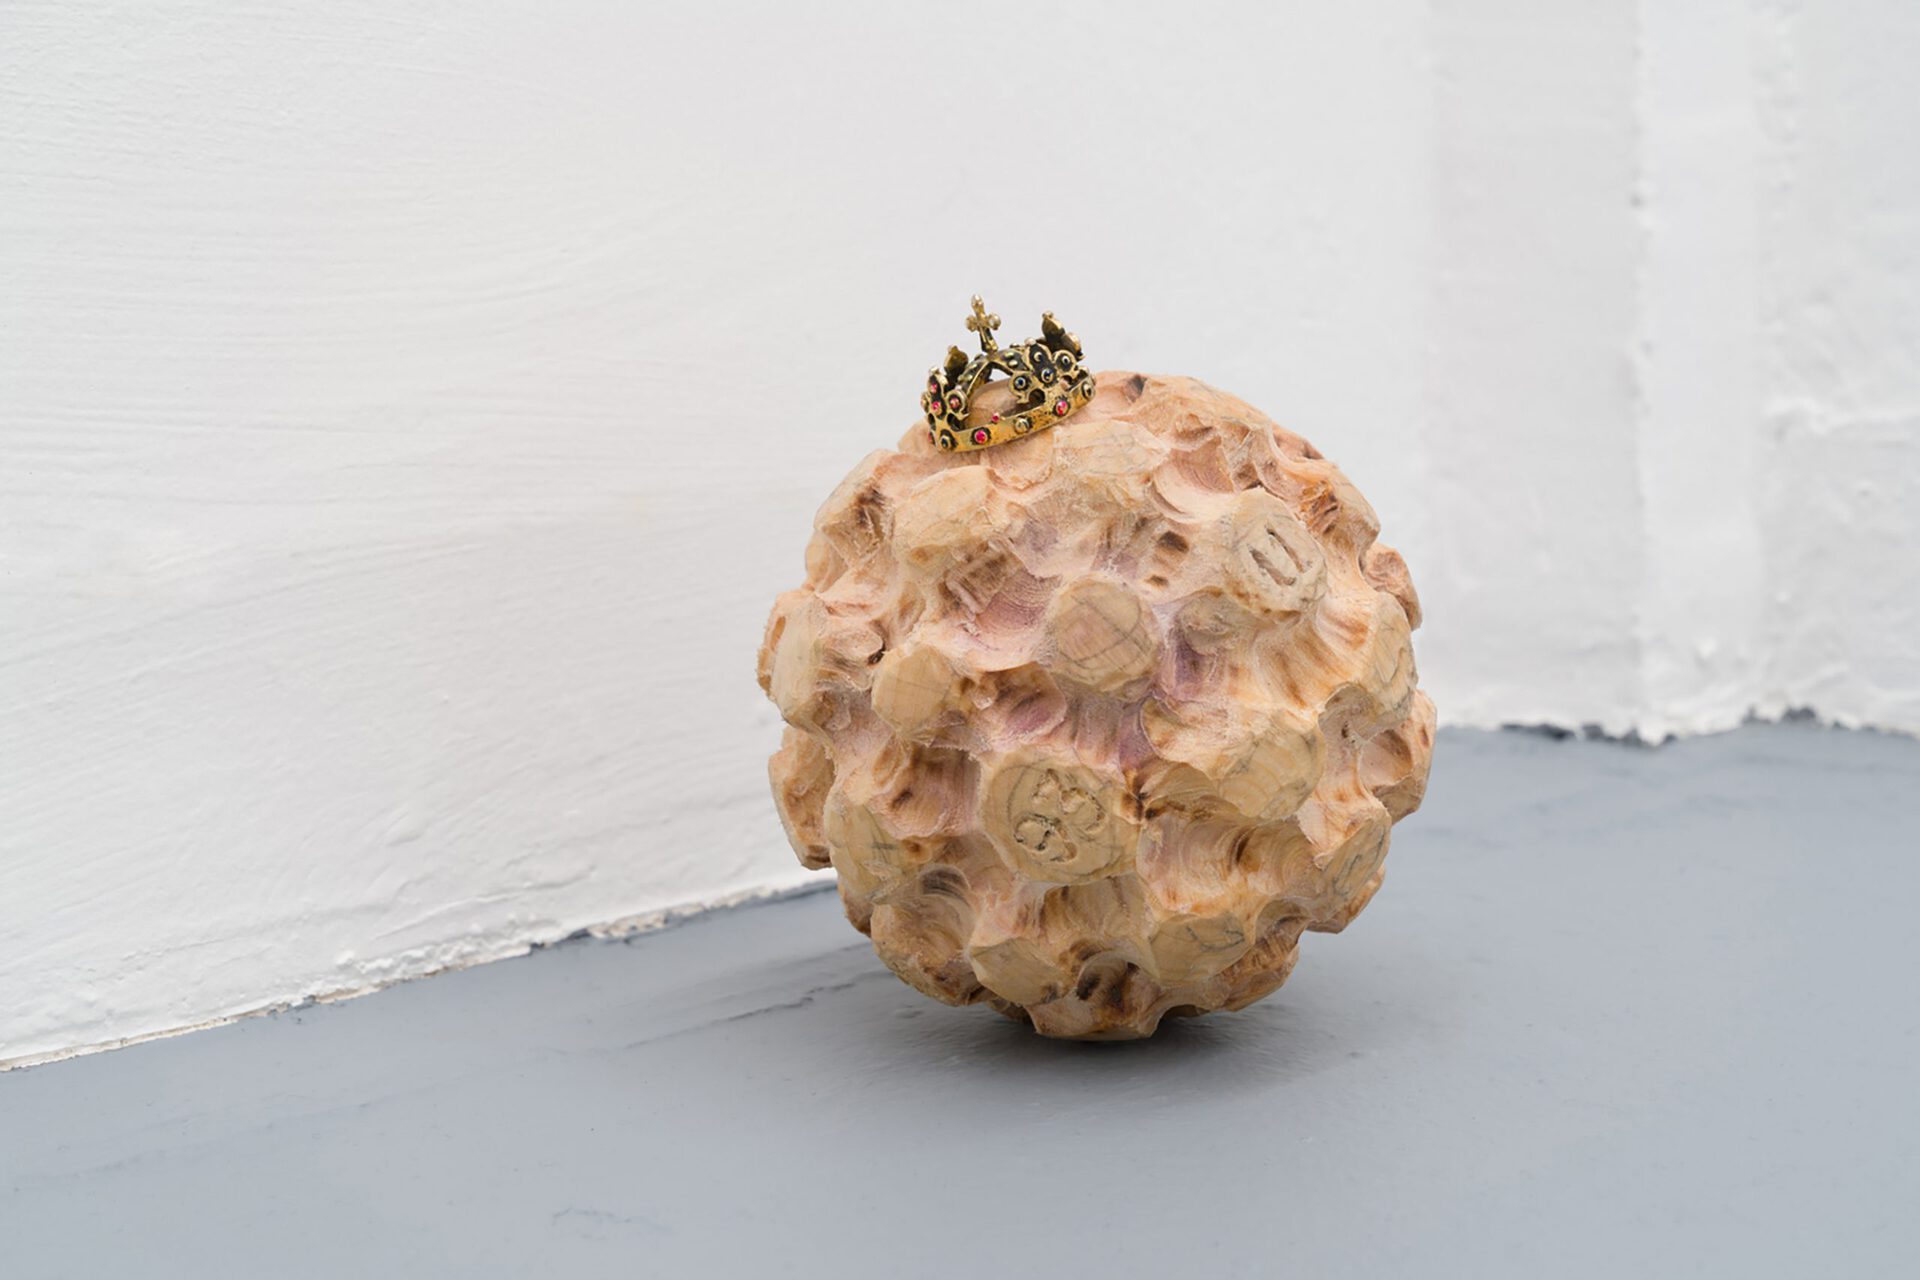 Dasha Kuznetsova, ‘Power of the crown (corona)’, 2020, carved wood, toy crown, acrylic lacquer, 10 x 9 x 9 cm